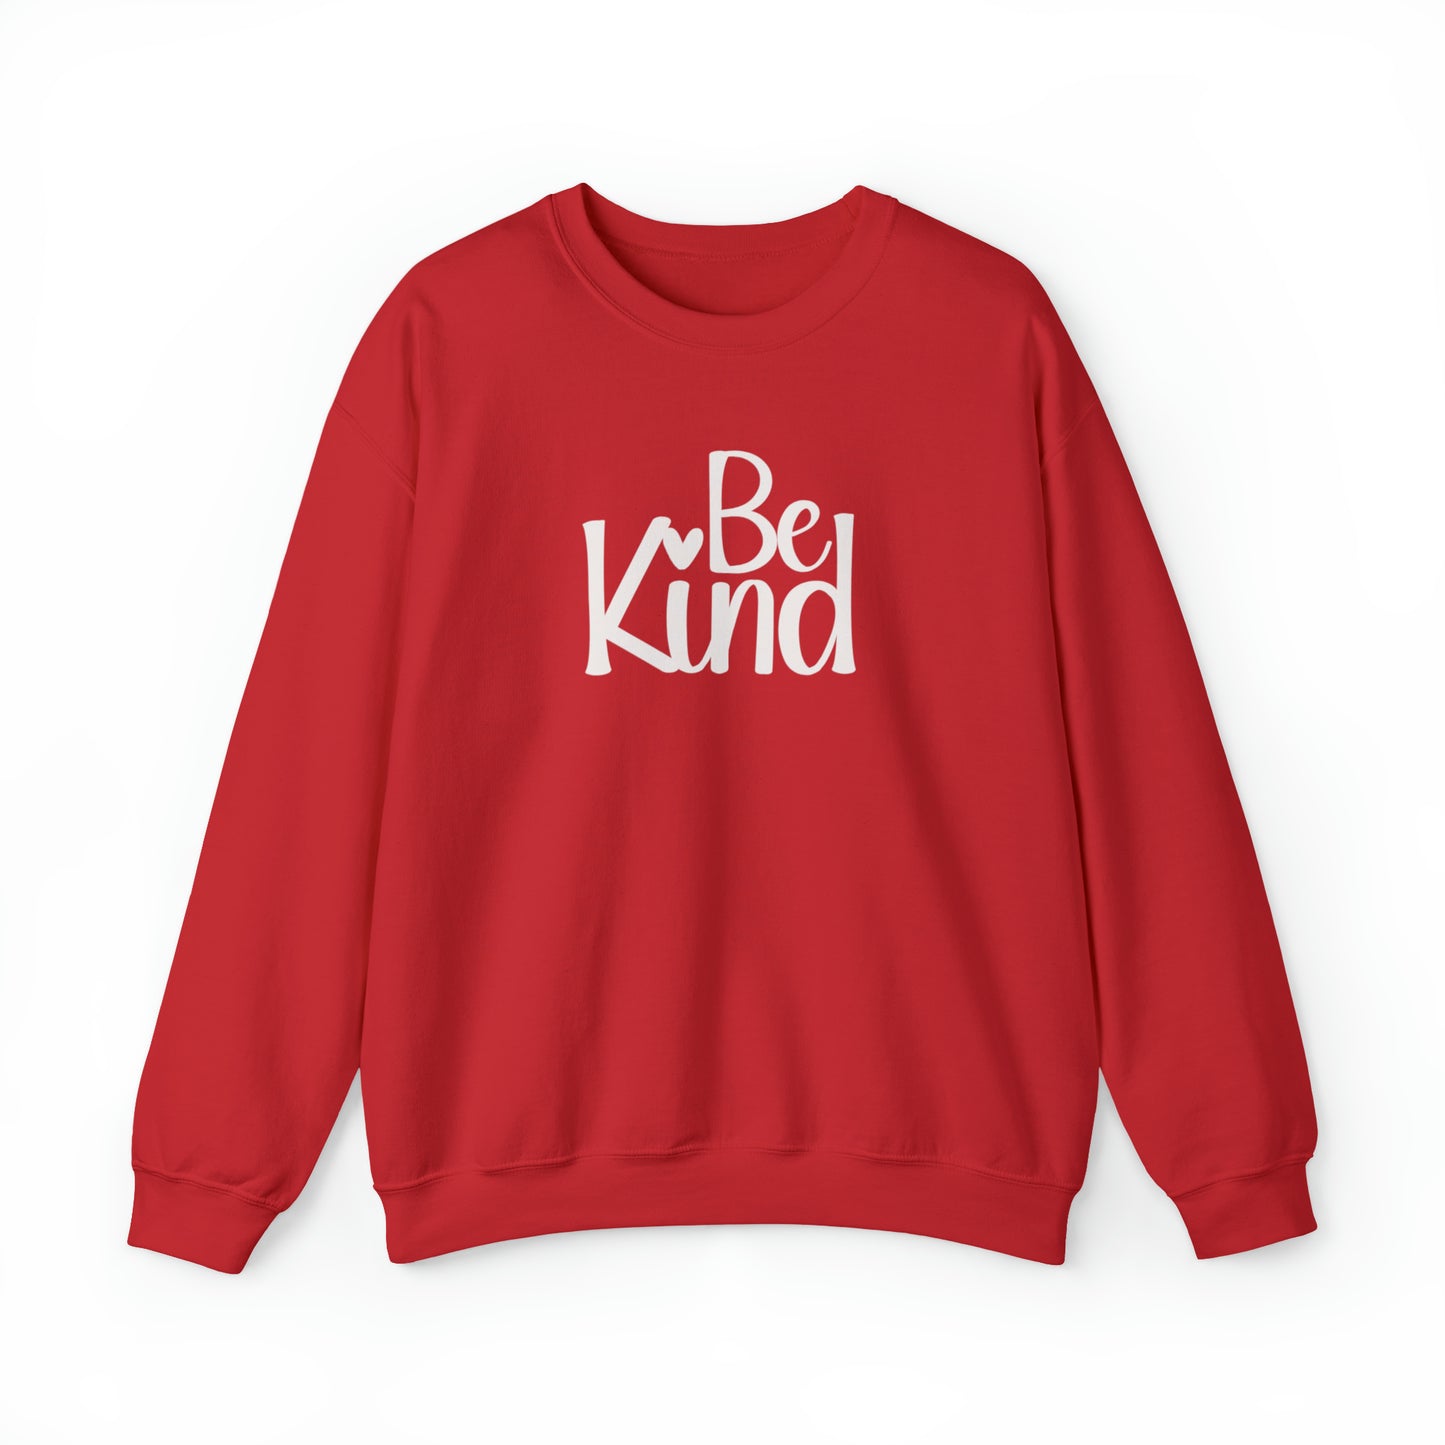 Be Kind Motivational Sweatshirt, Inspirational Shirt, Kindness Shirt